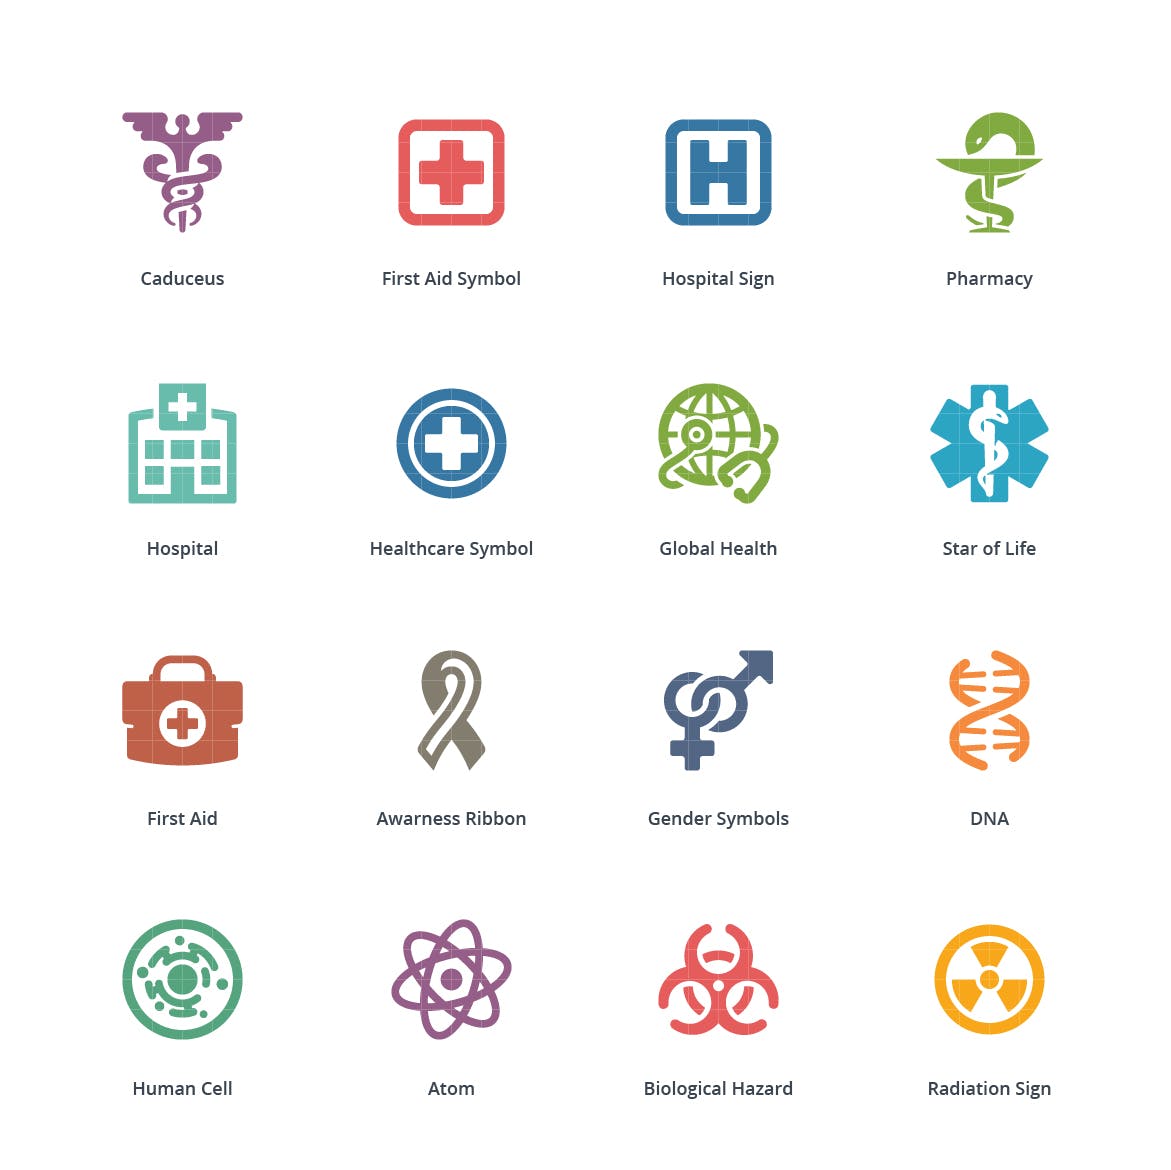 Colored系列-医疗保健主题矢量蚂蚁素材精选图标集v1 Medical & Health Care Icons Set 1 – Colored Series插图(1)